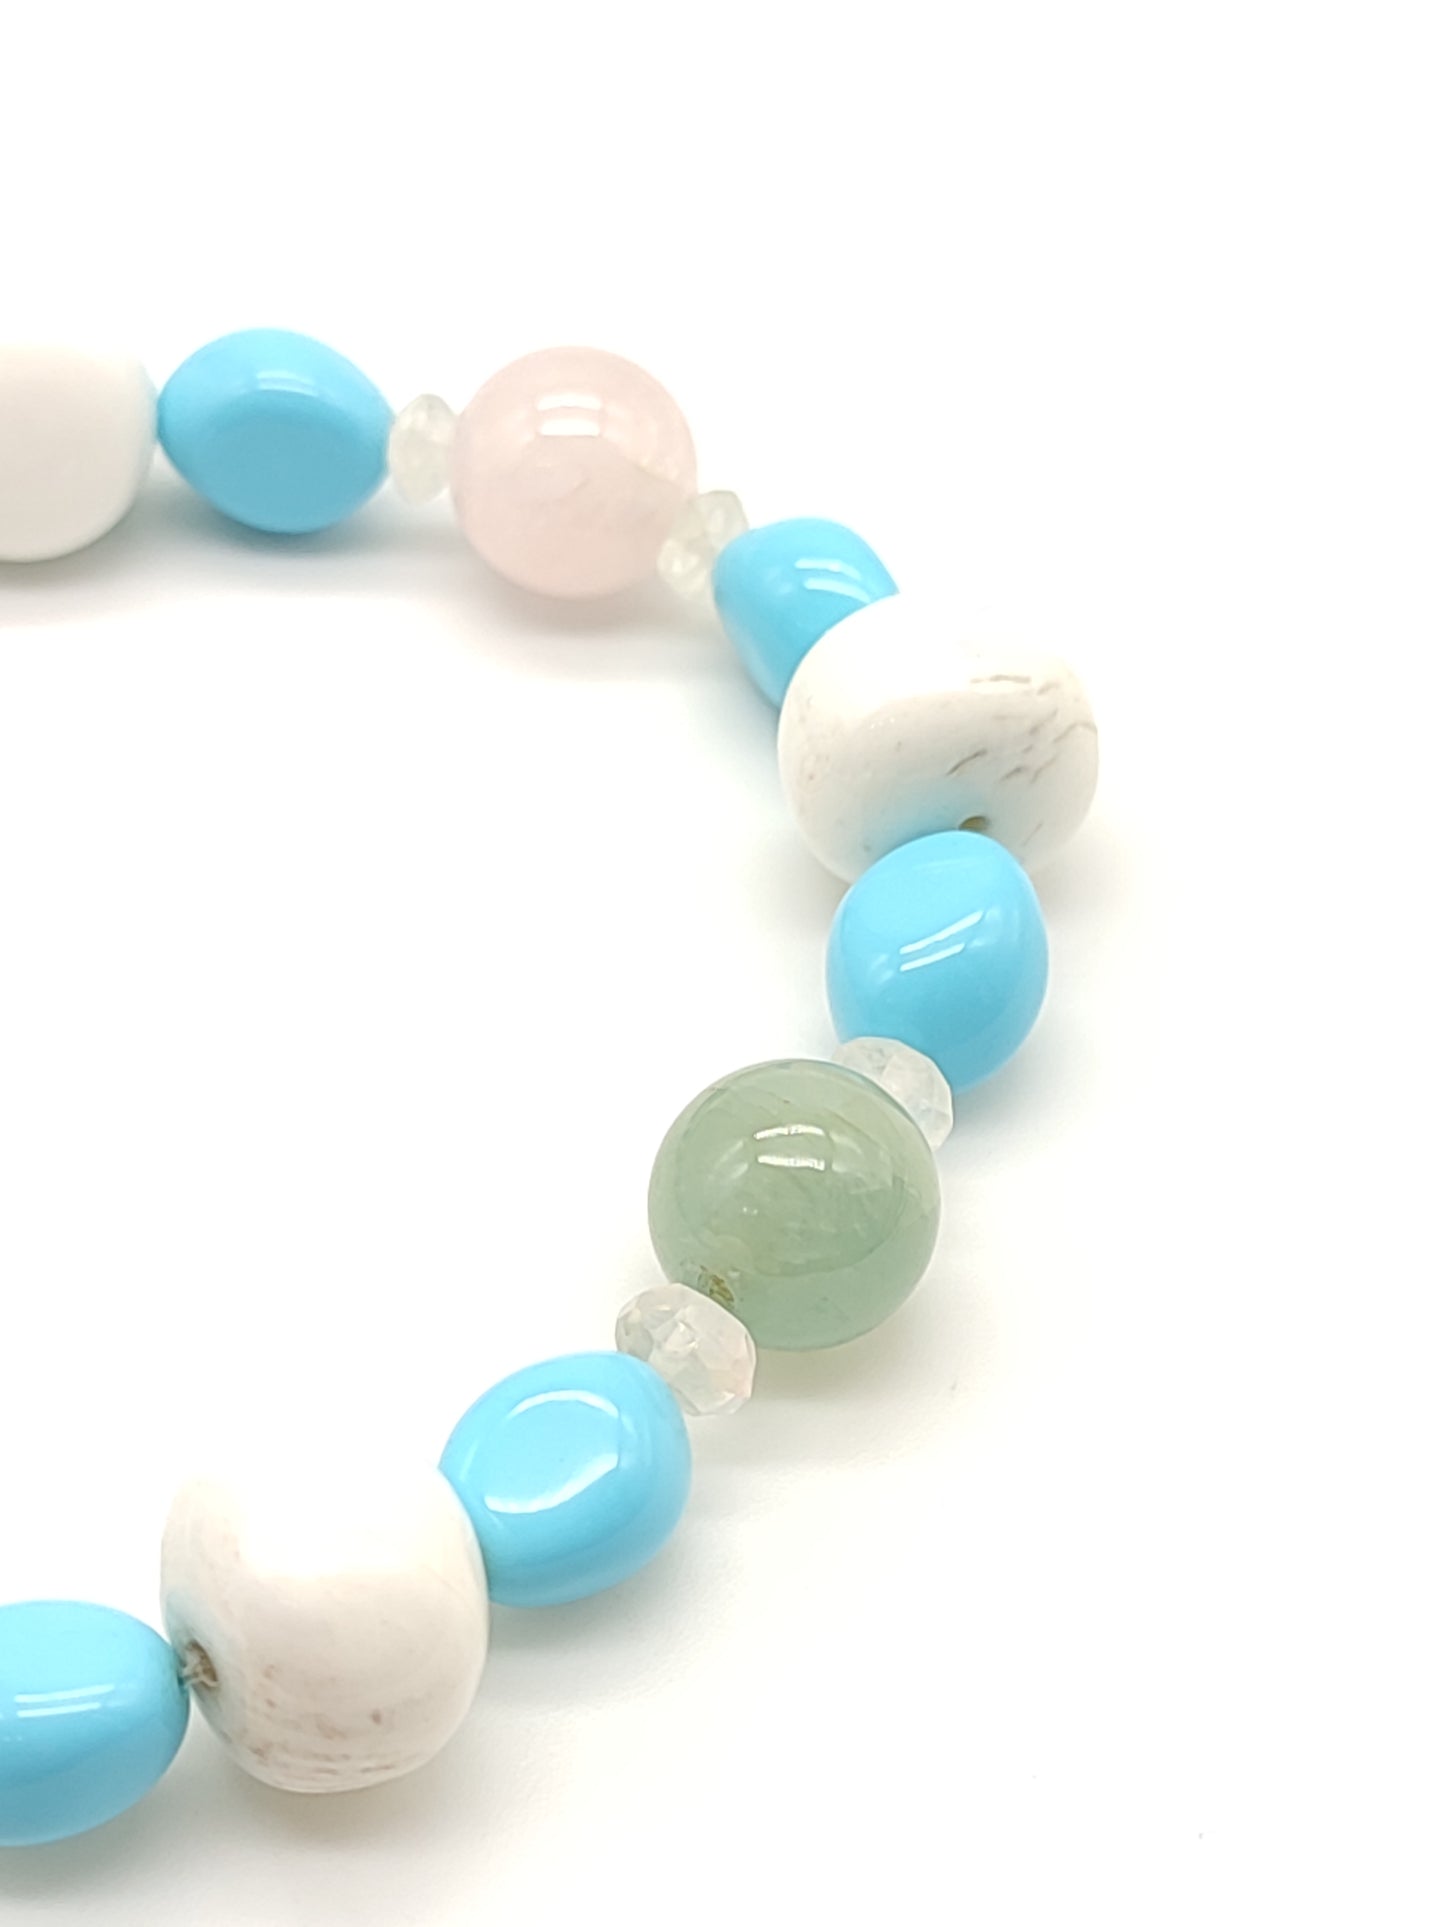 Sea bracelet with turquoises and quartz